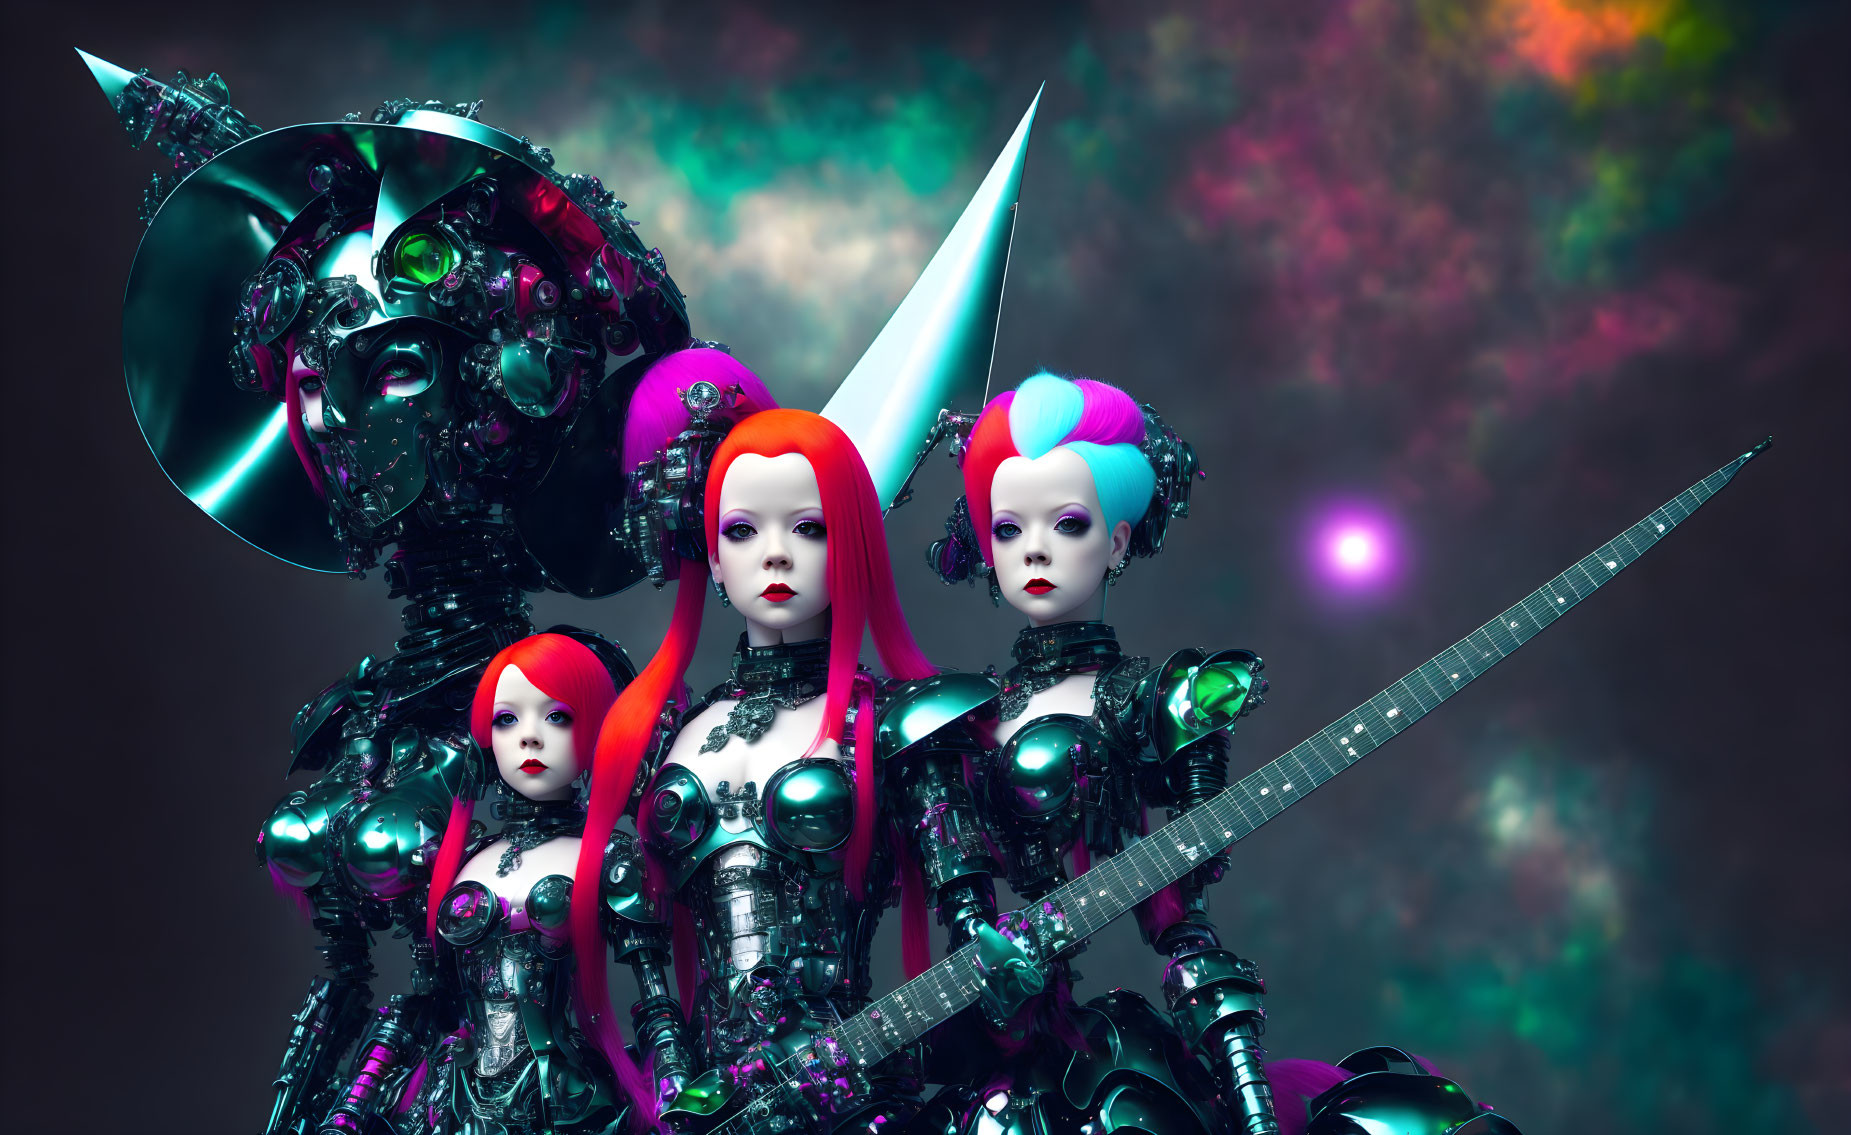 Colorful humanoid robot figures against nebula backdrop